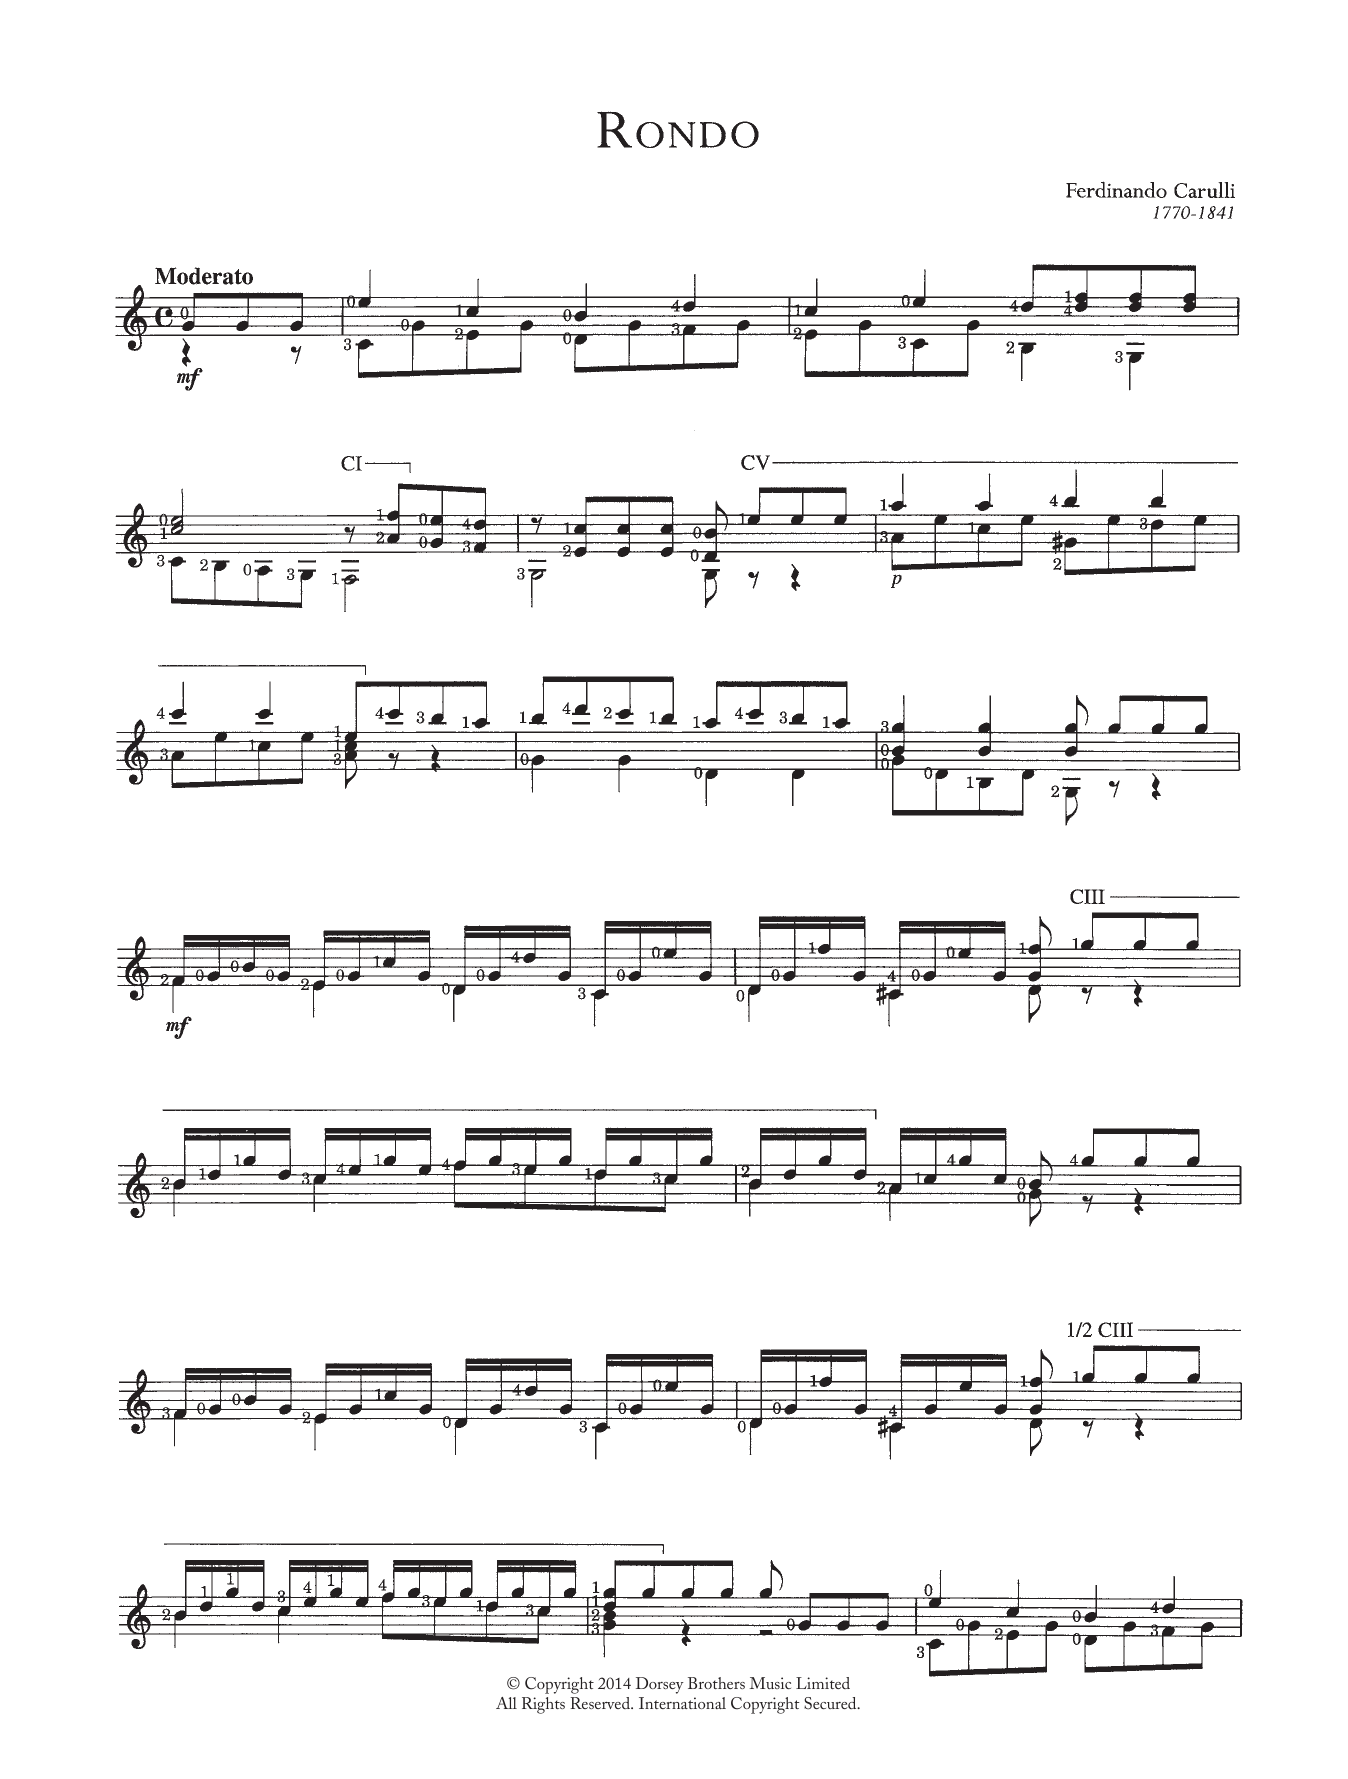 Ferdinando Carulli Rondo Sheet Music Notes & Chords for Guitar - Download or Print PDF